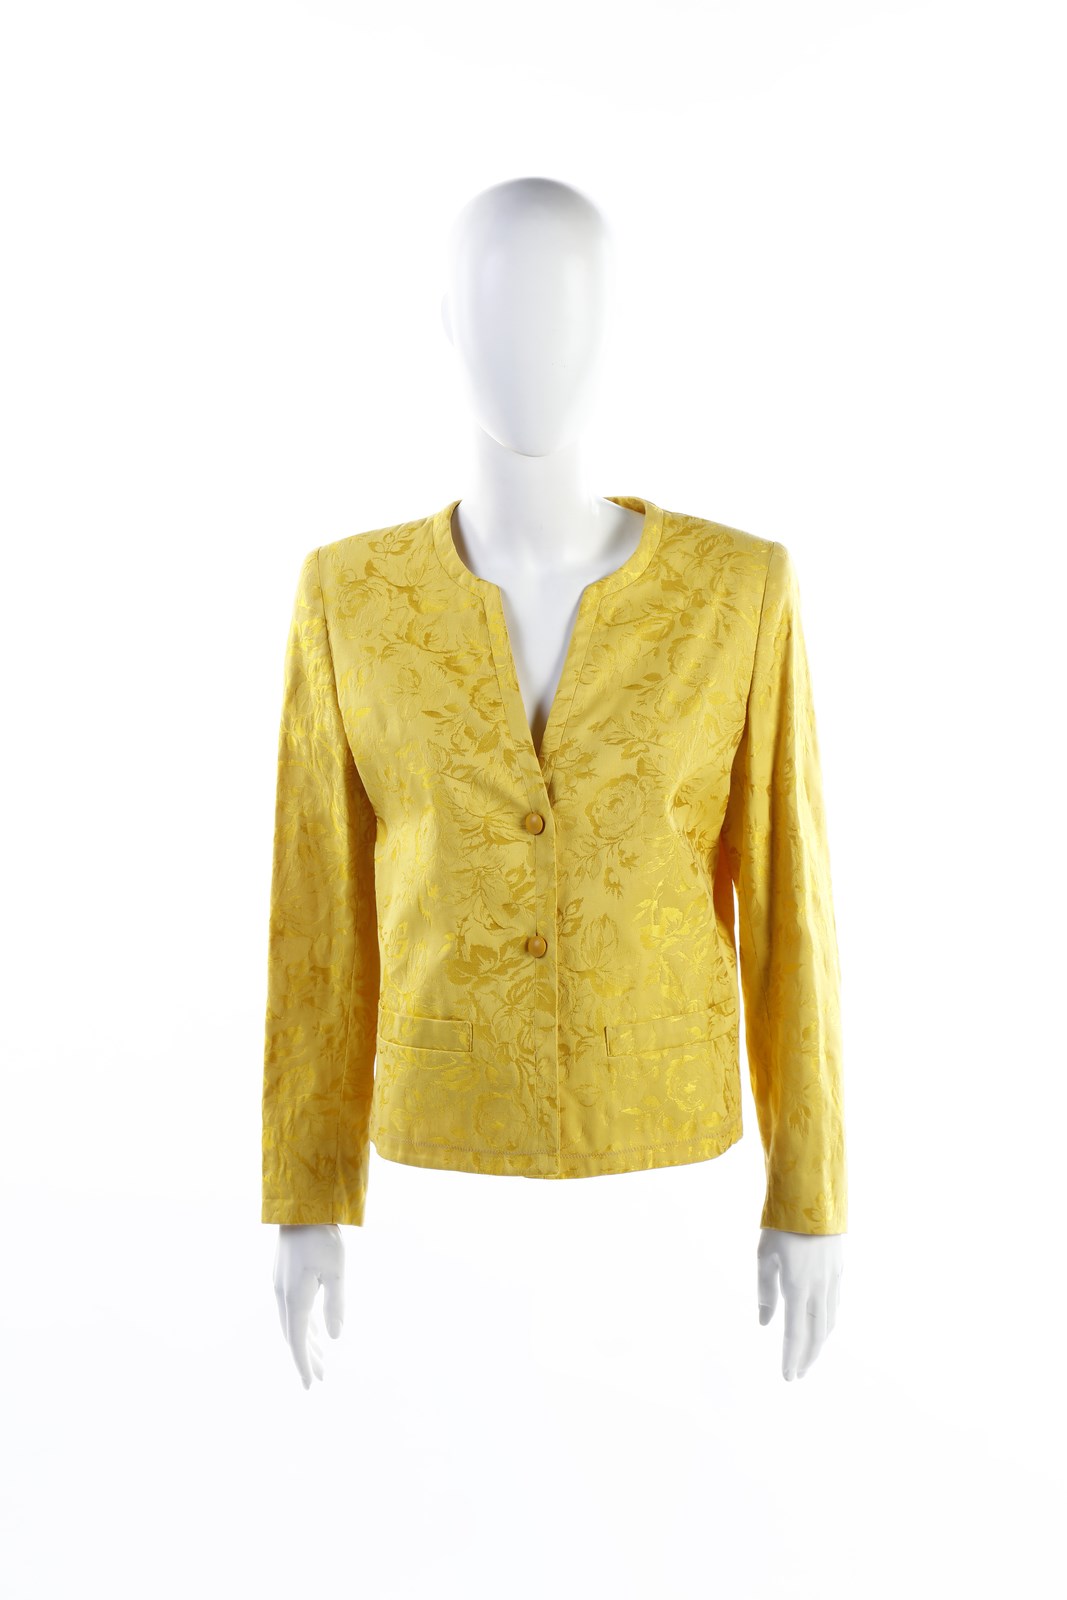 Yellow textured damask cotton jacket. (Christian Dior)